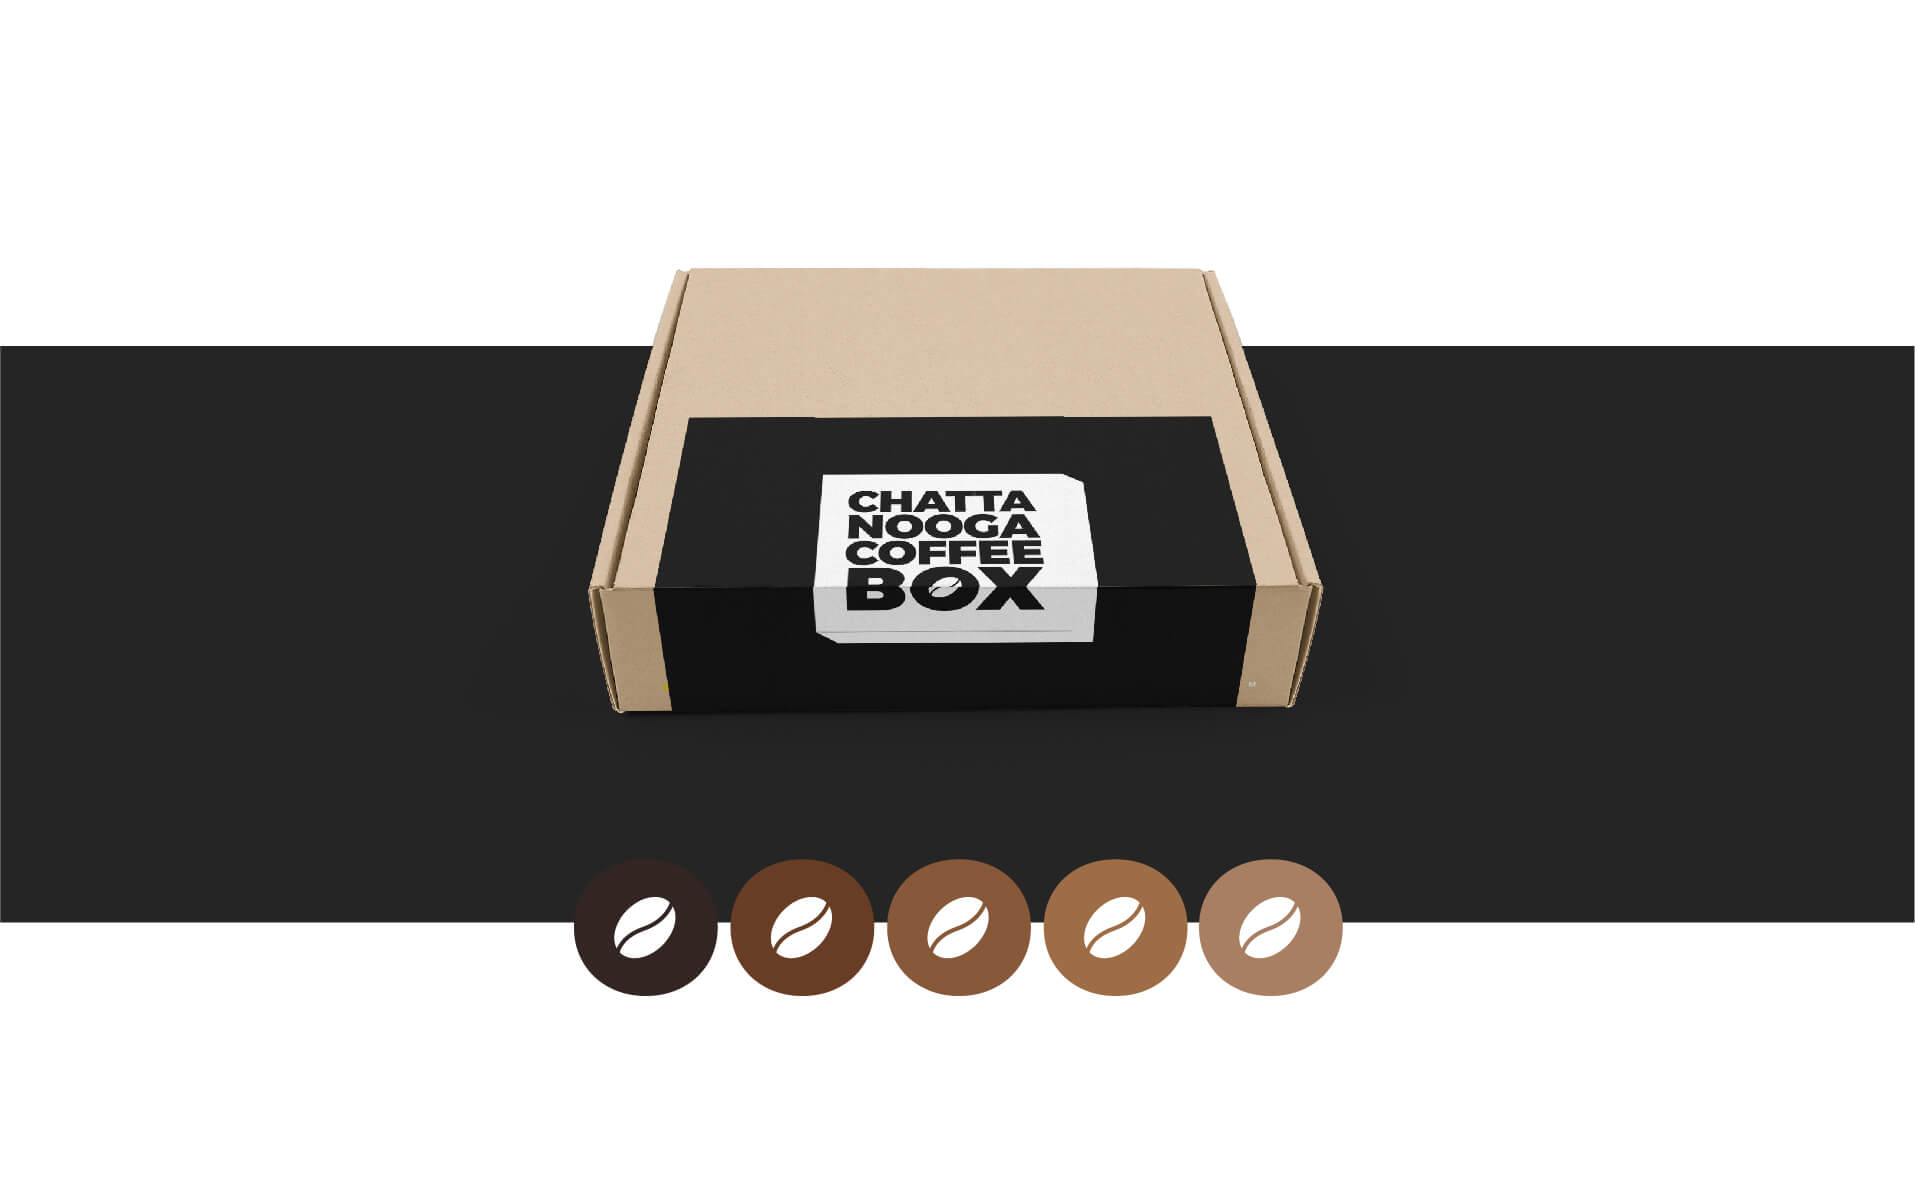 Chattanooga Coffee Box shipping box